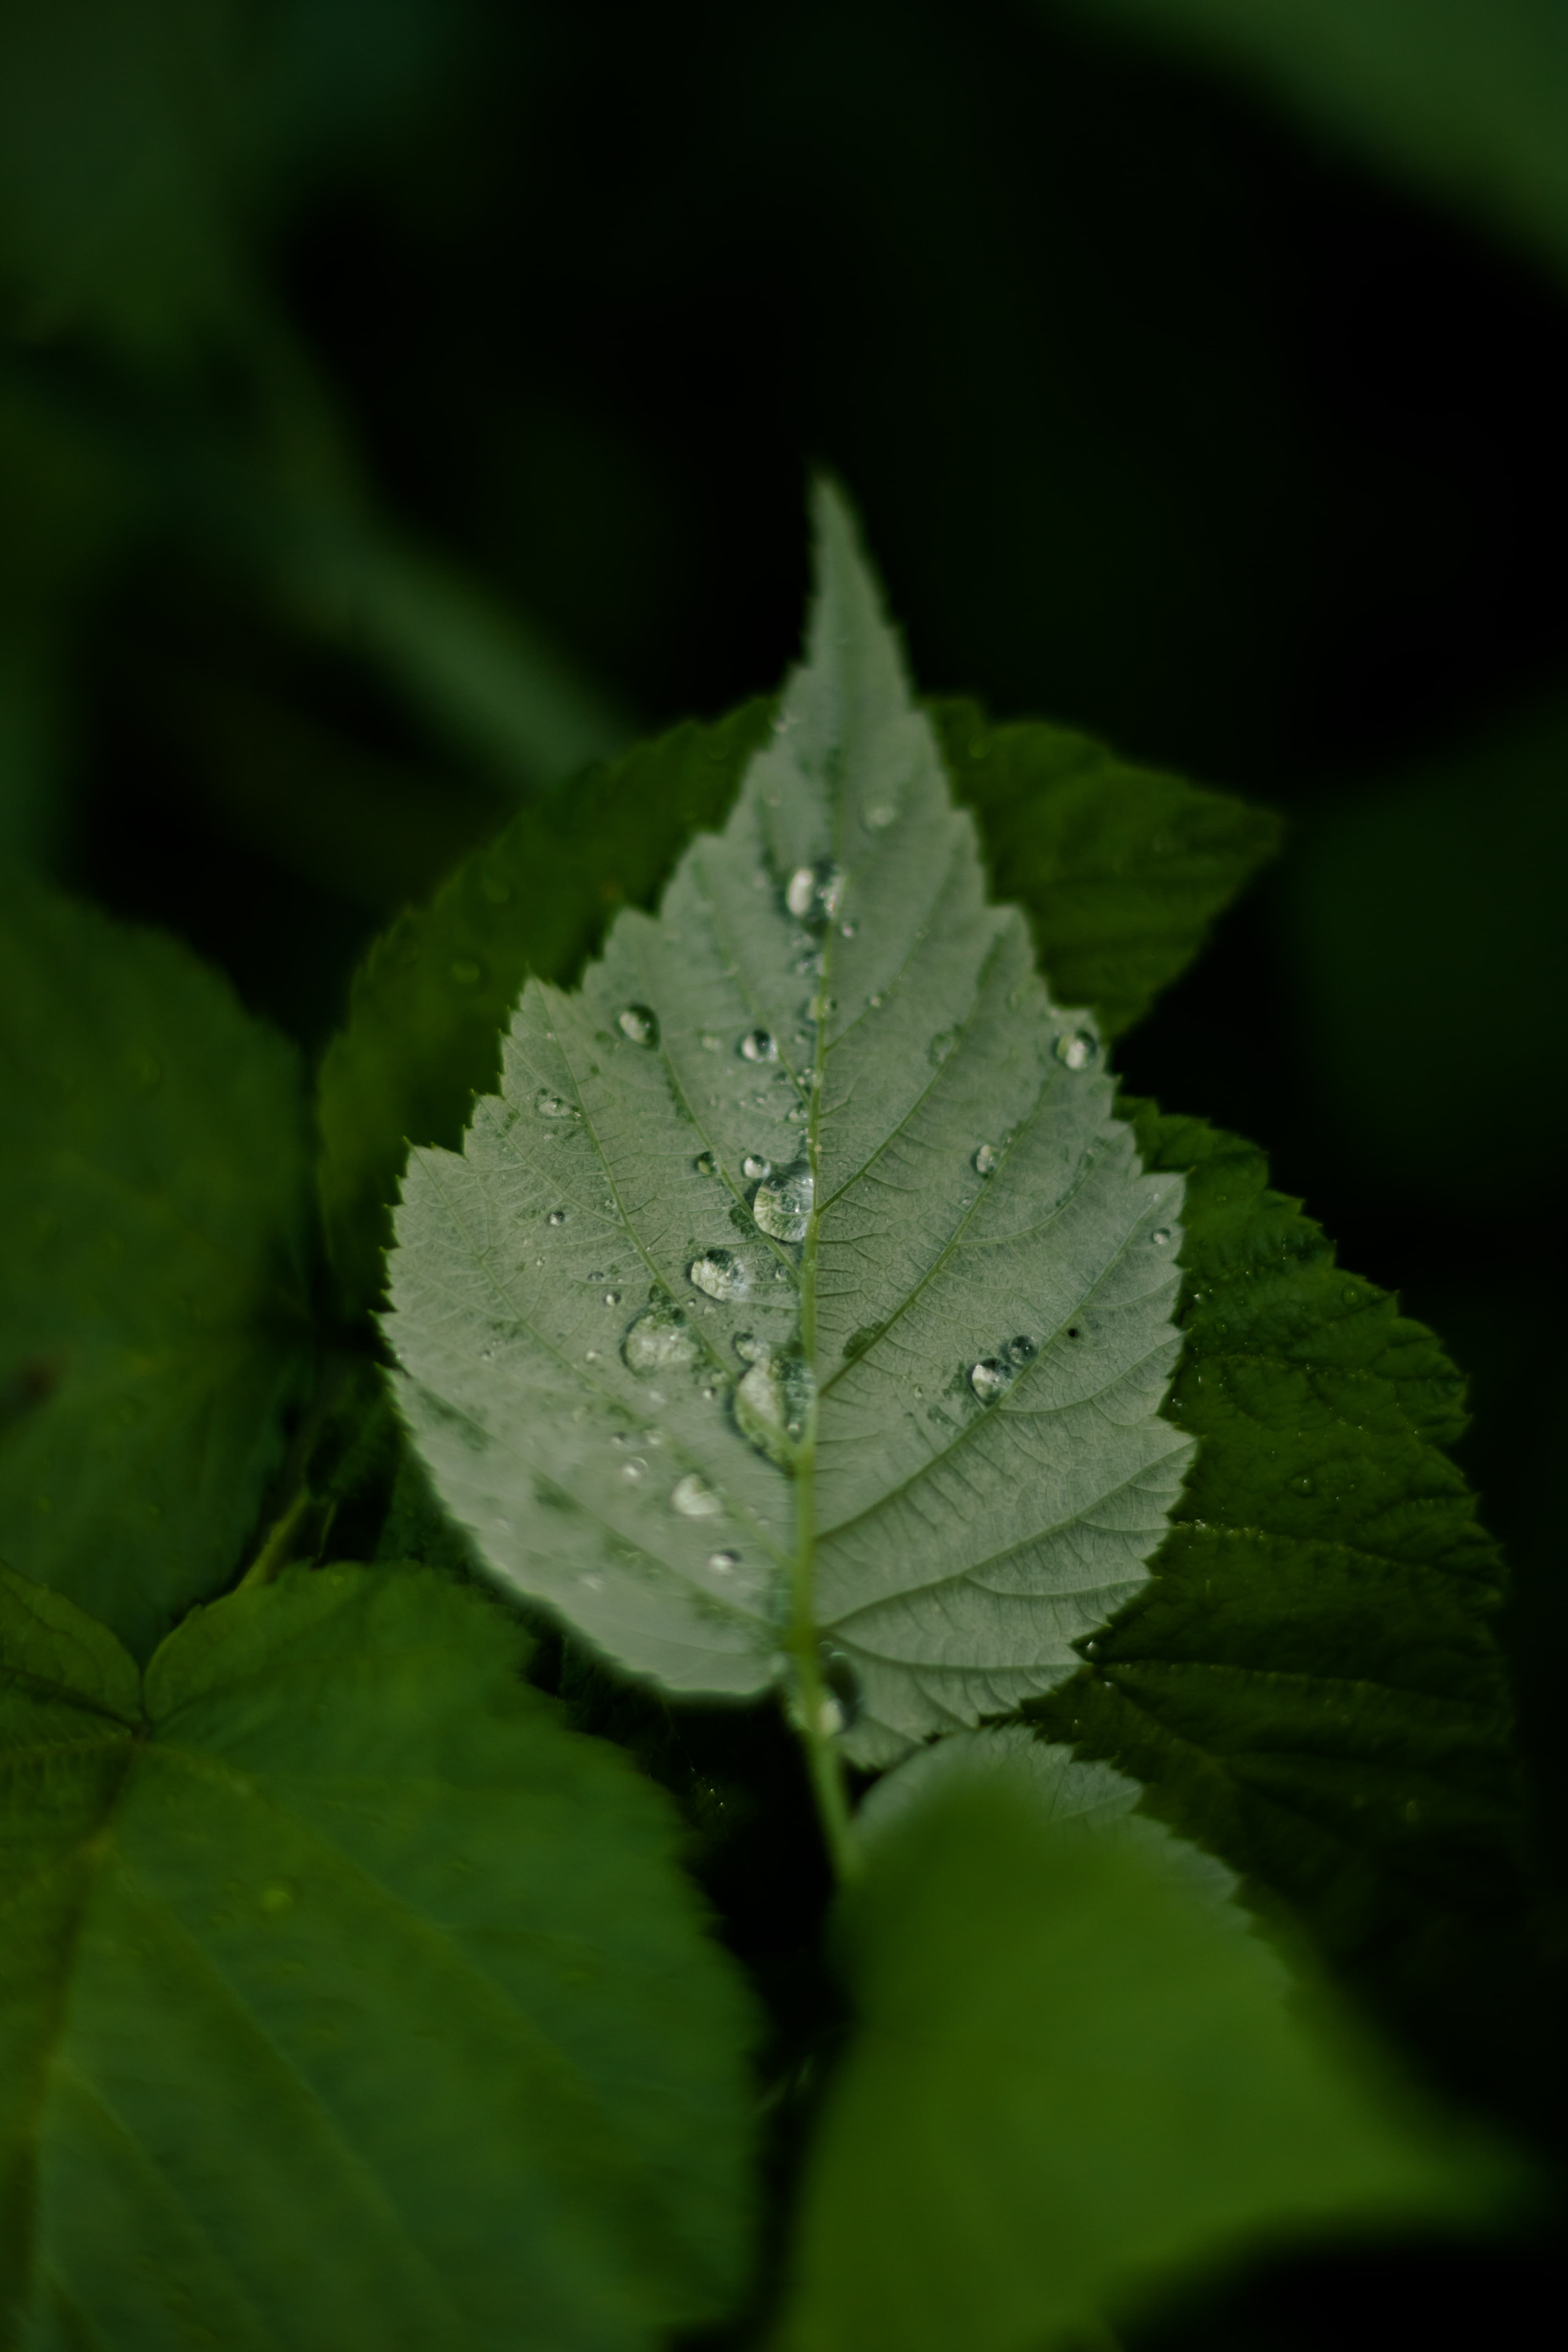 Free picture: waterdrop, green leaves, moisture, purity, dew, shadow, dark  green, nature, rain, plant